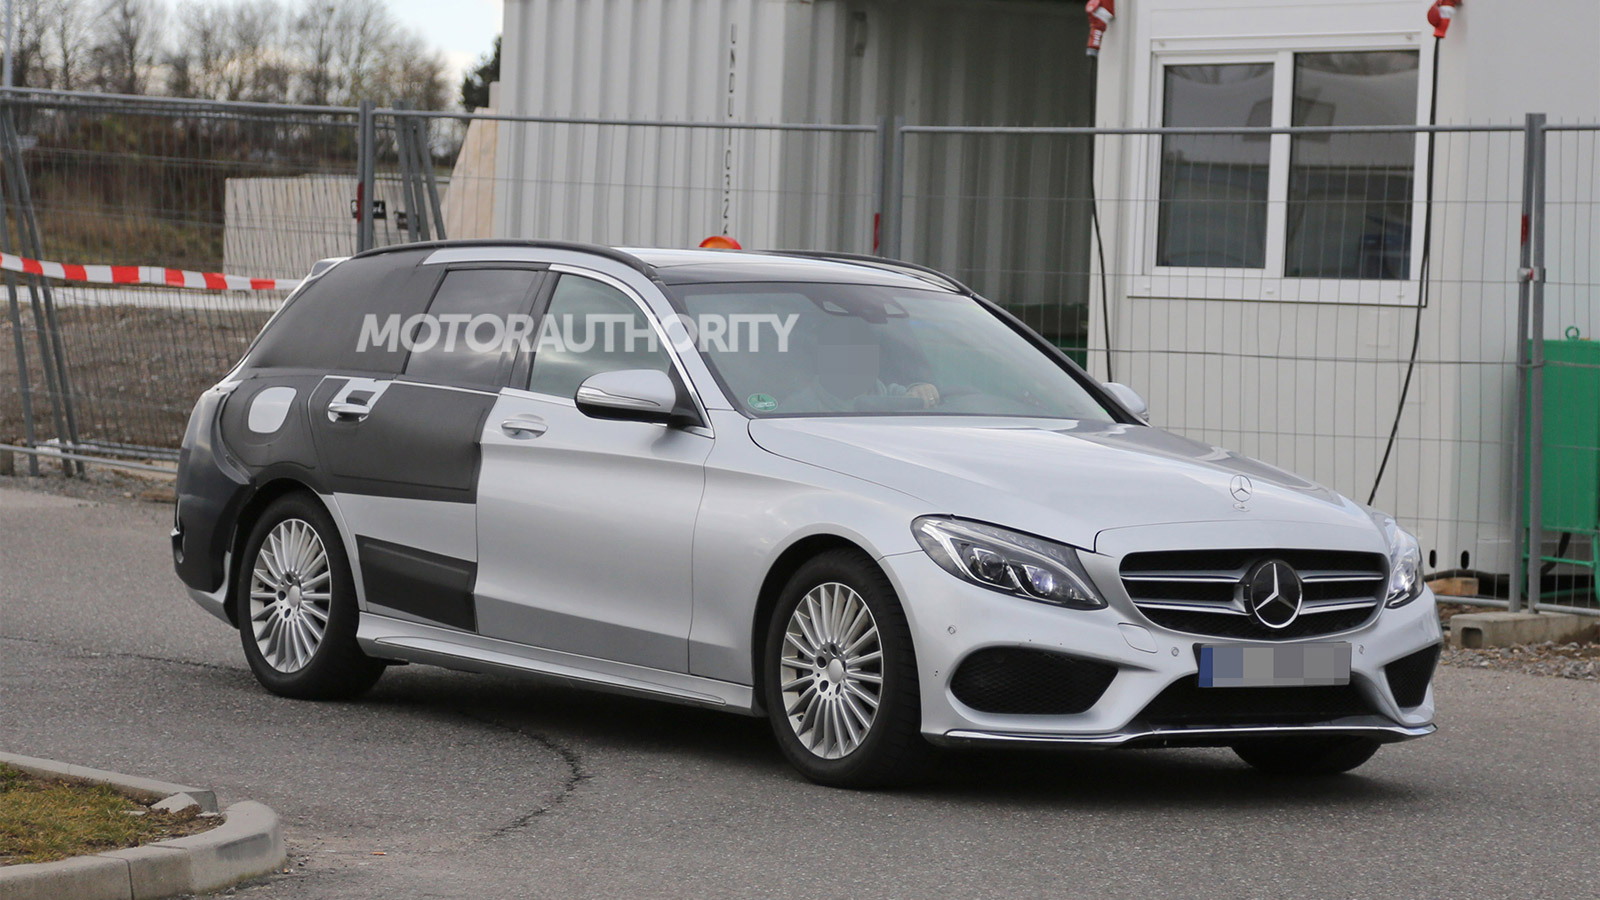 2015 Mercedes-Benz C-Class Estate (wagon) spy shots